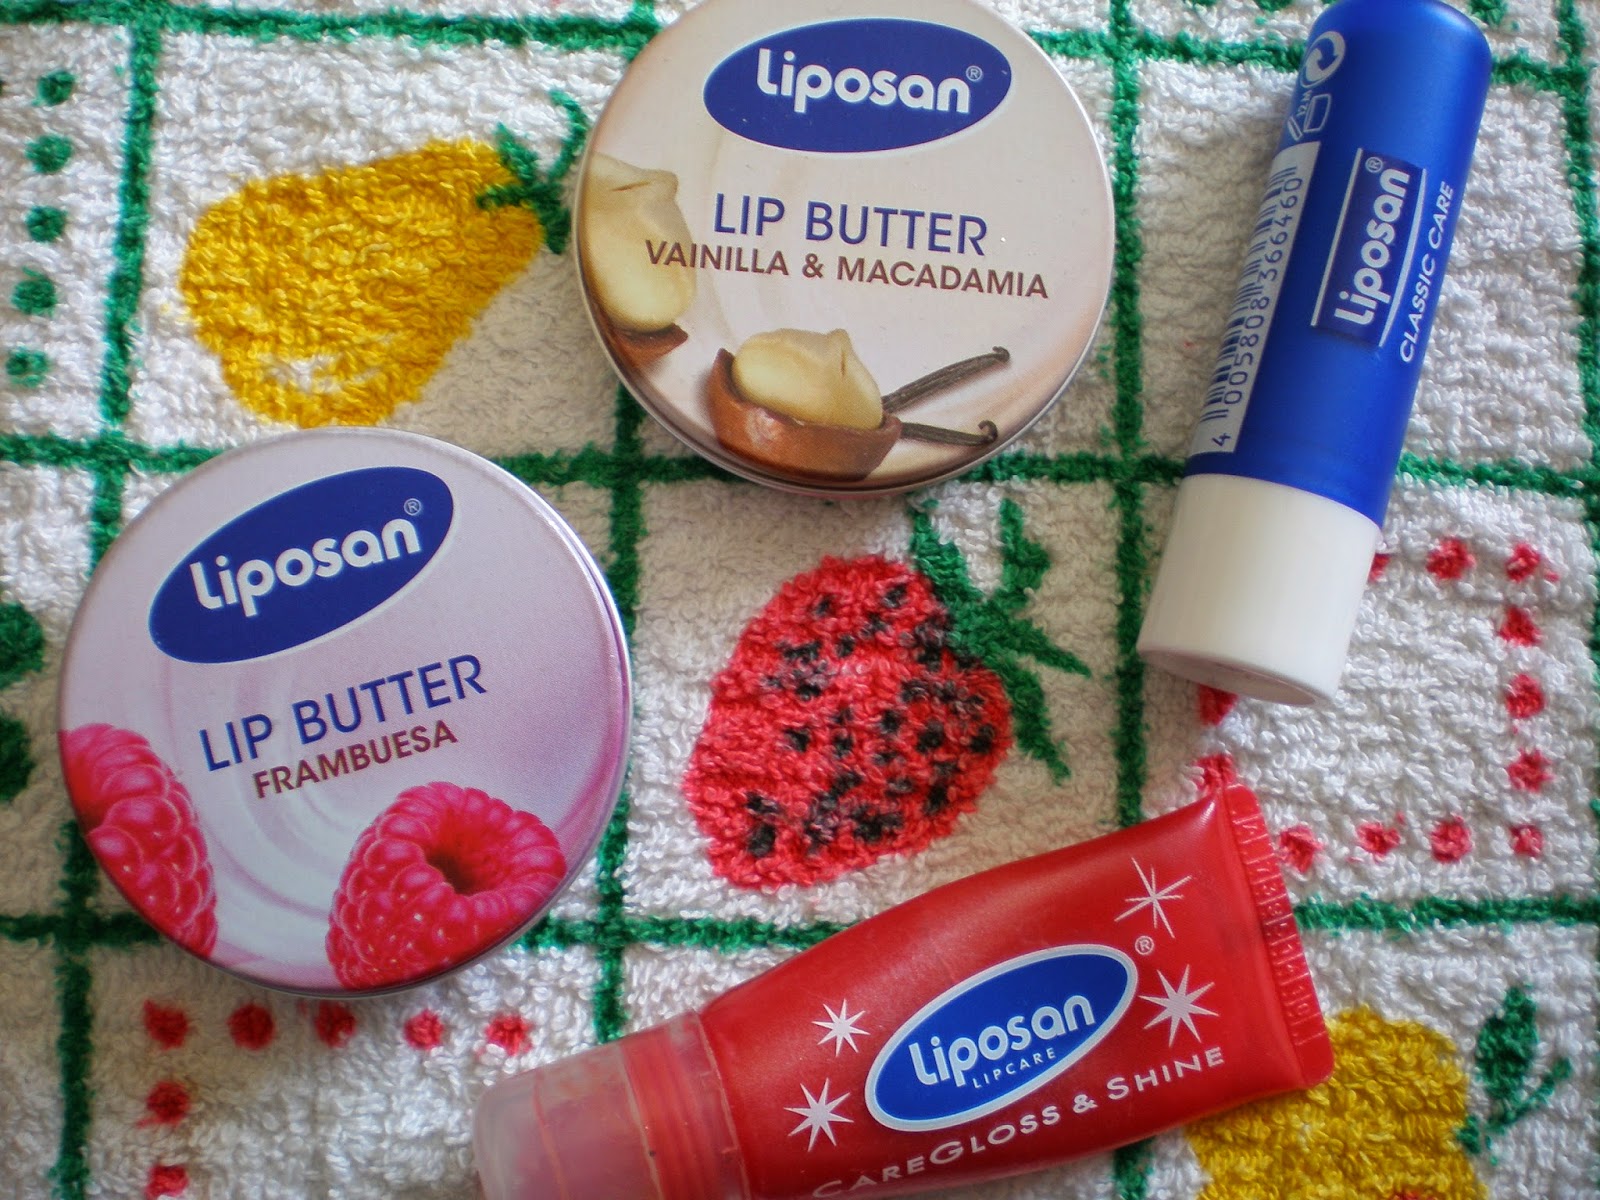 liposan Classic care, lip butter Frambuesa, lip butter Vanilla & Macadamia, caregloss & shine